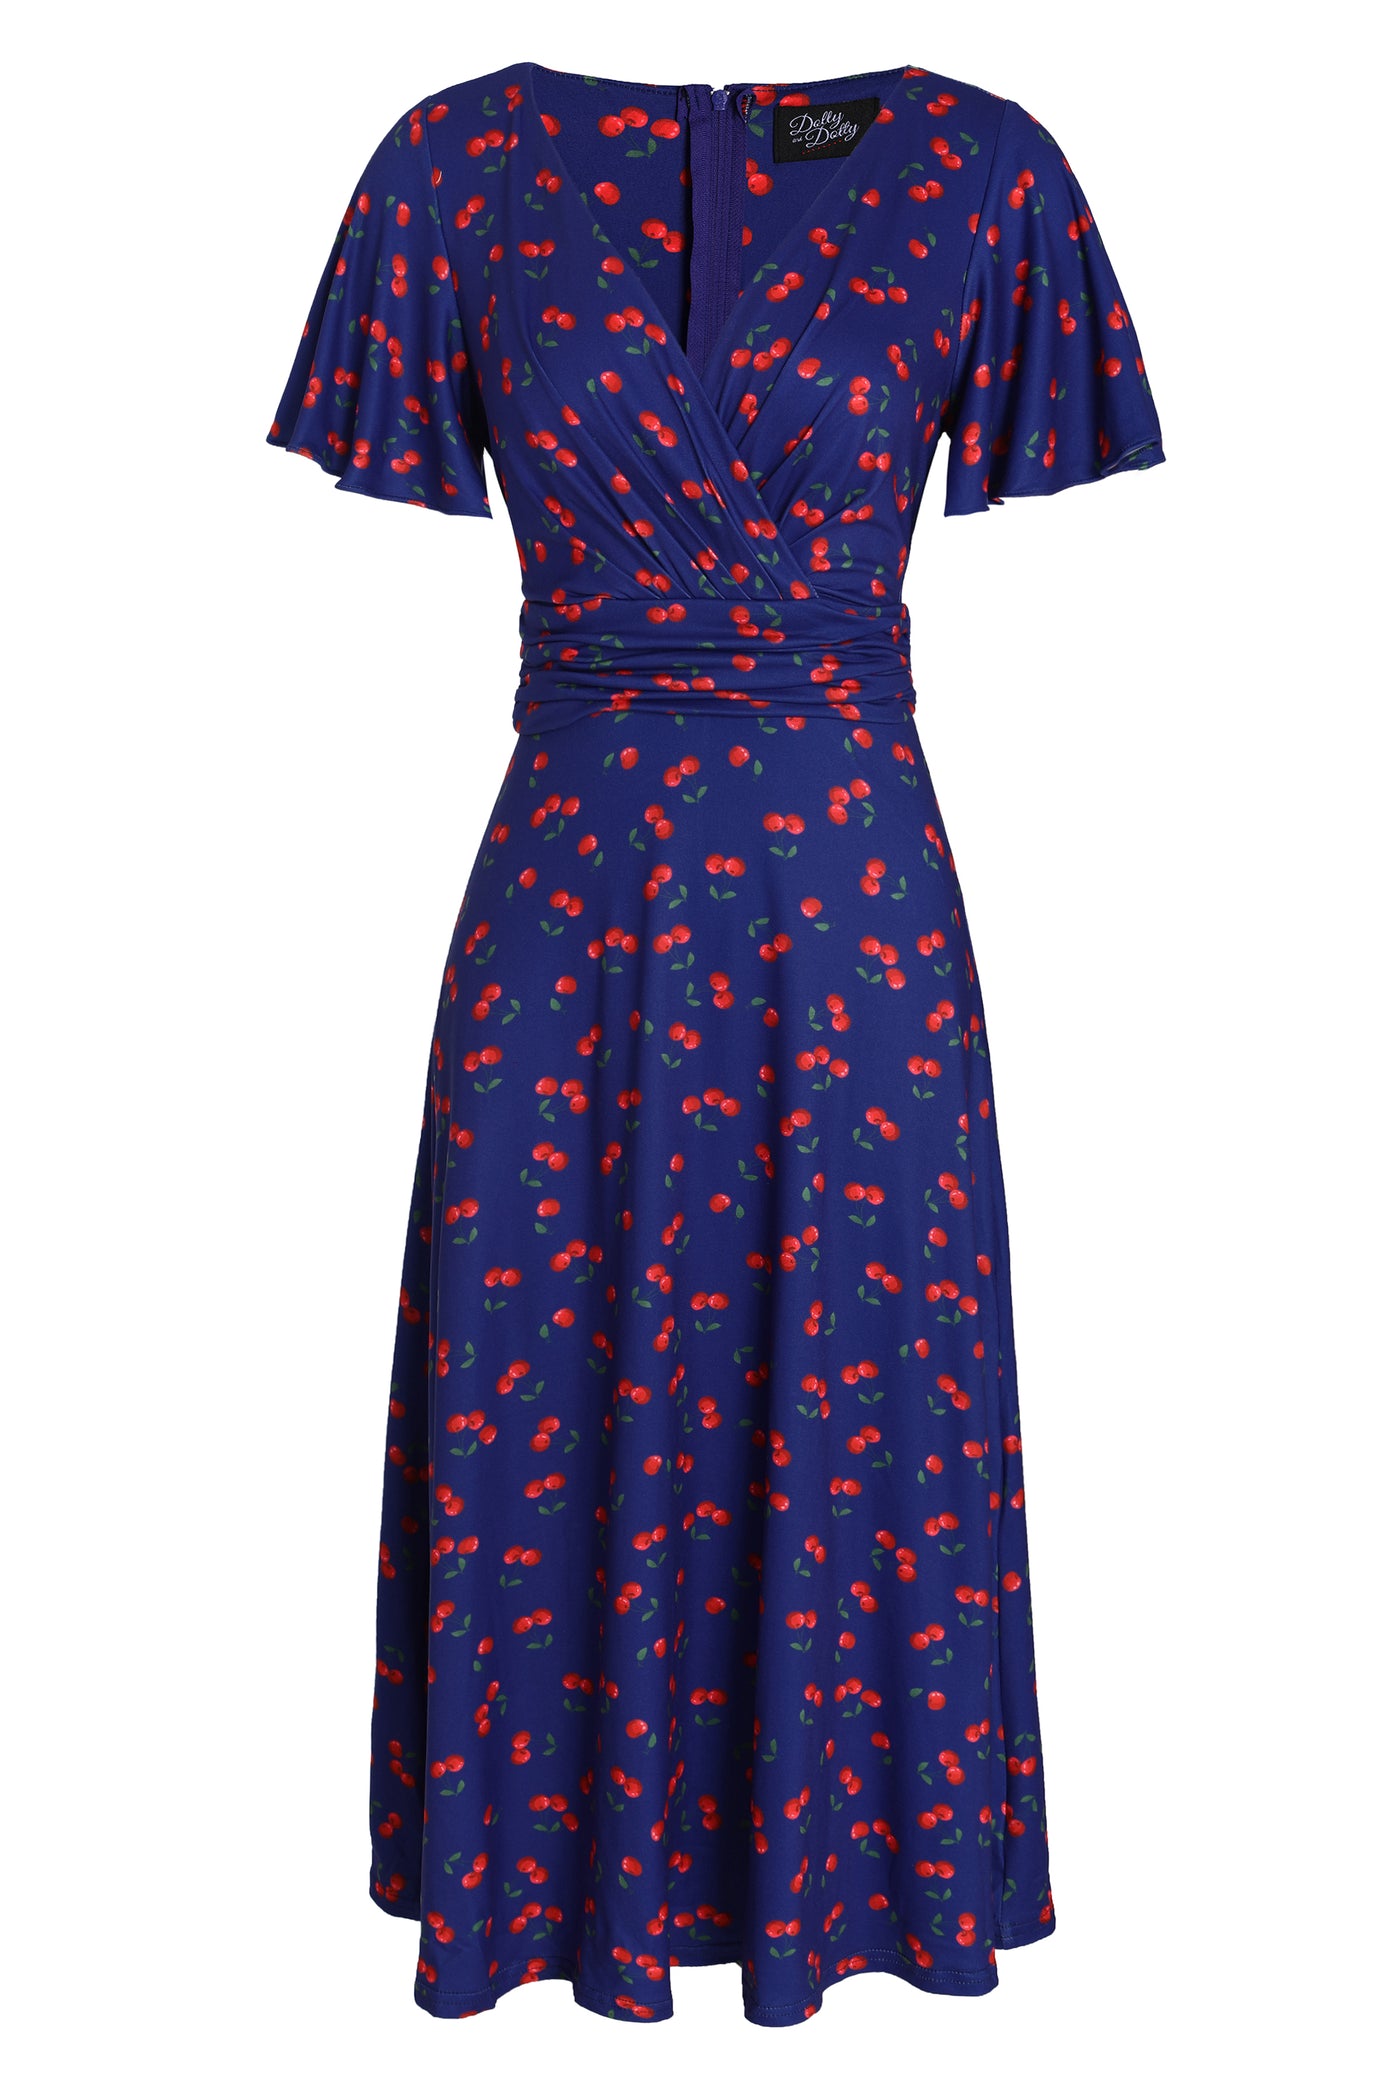 Donna Navy Blue Tea Dress in Cherry Fruit Print